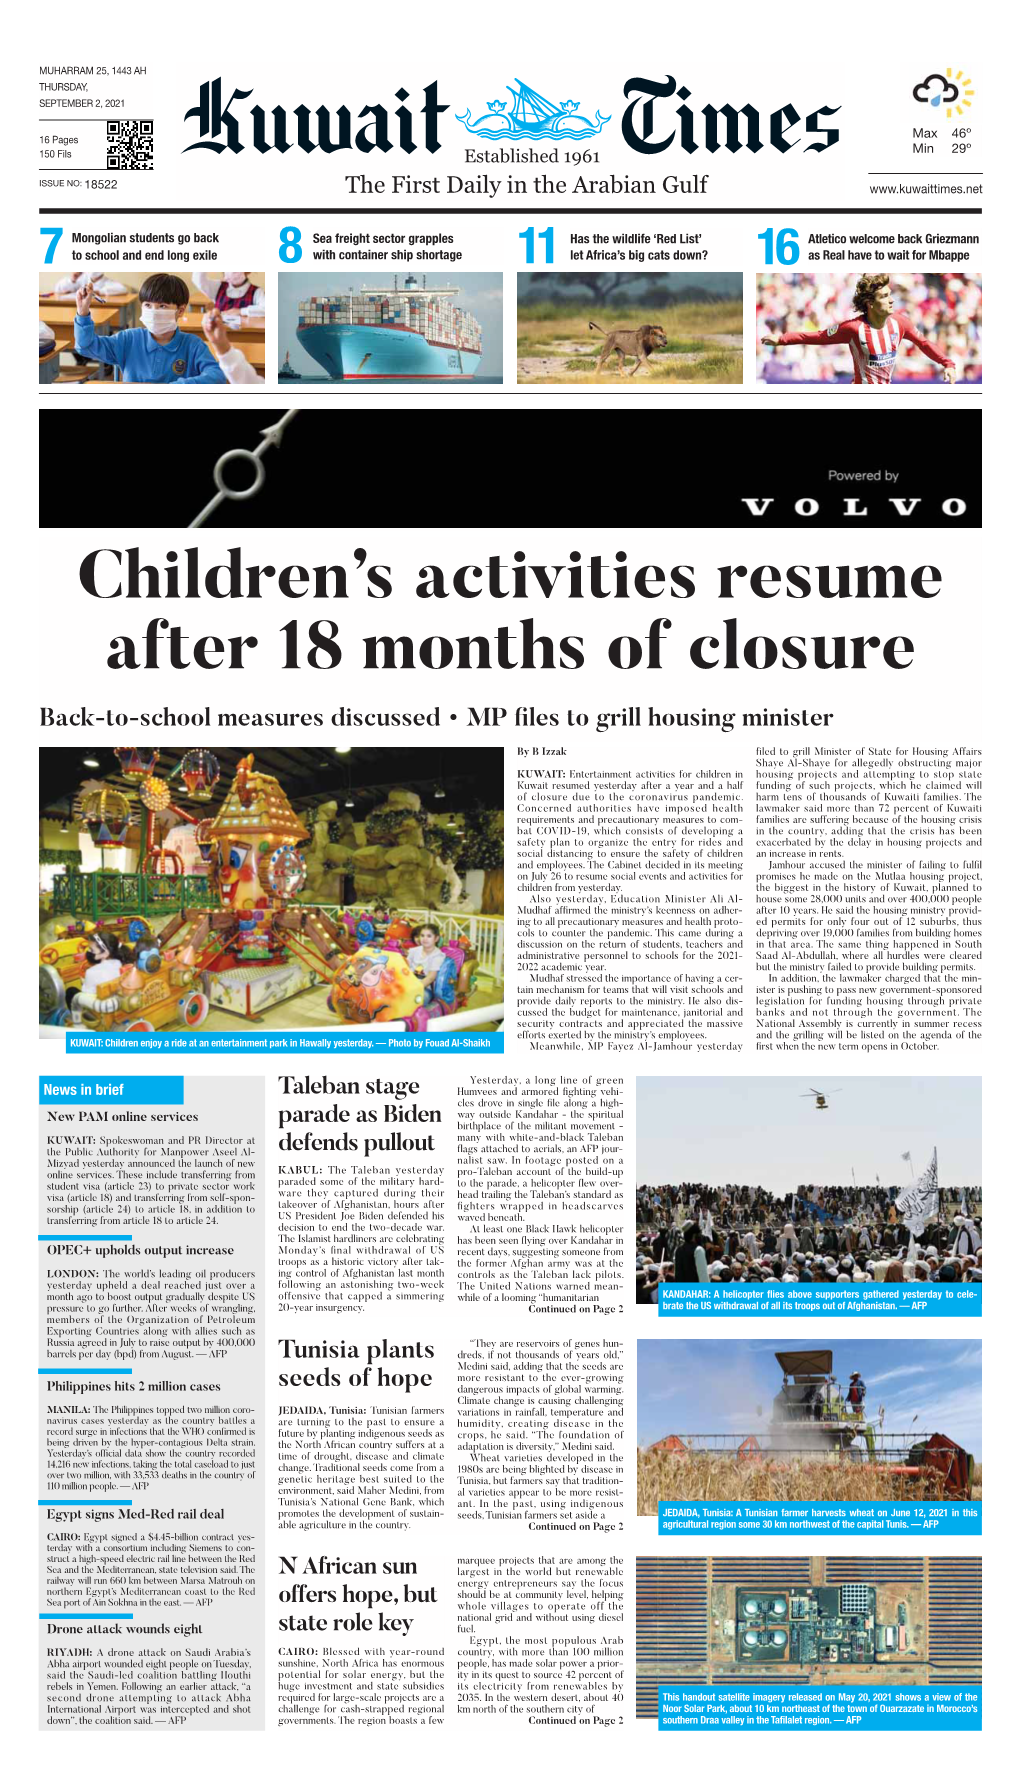 Children's Activities Resume After 18 Months of Closure